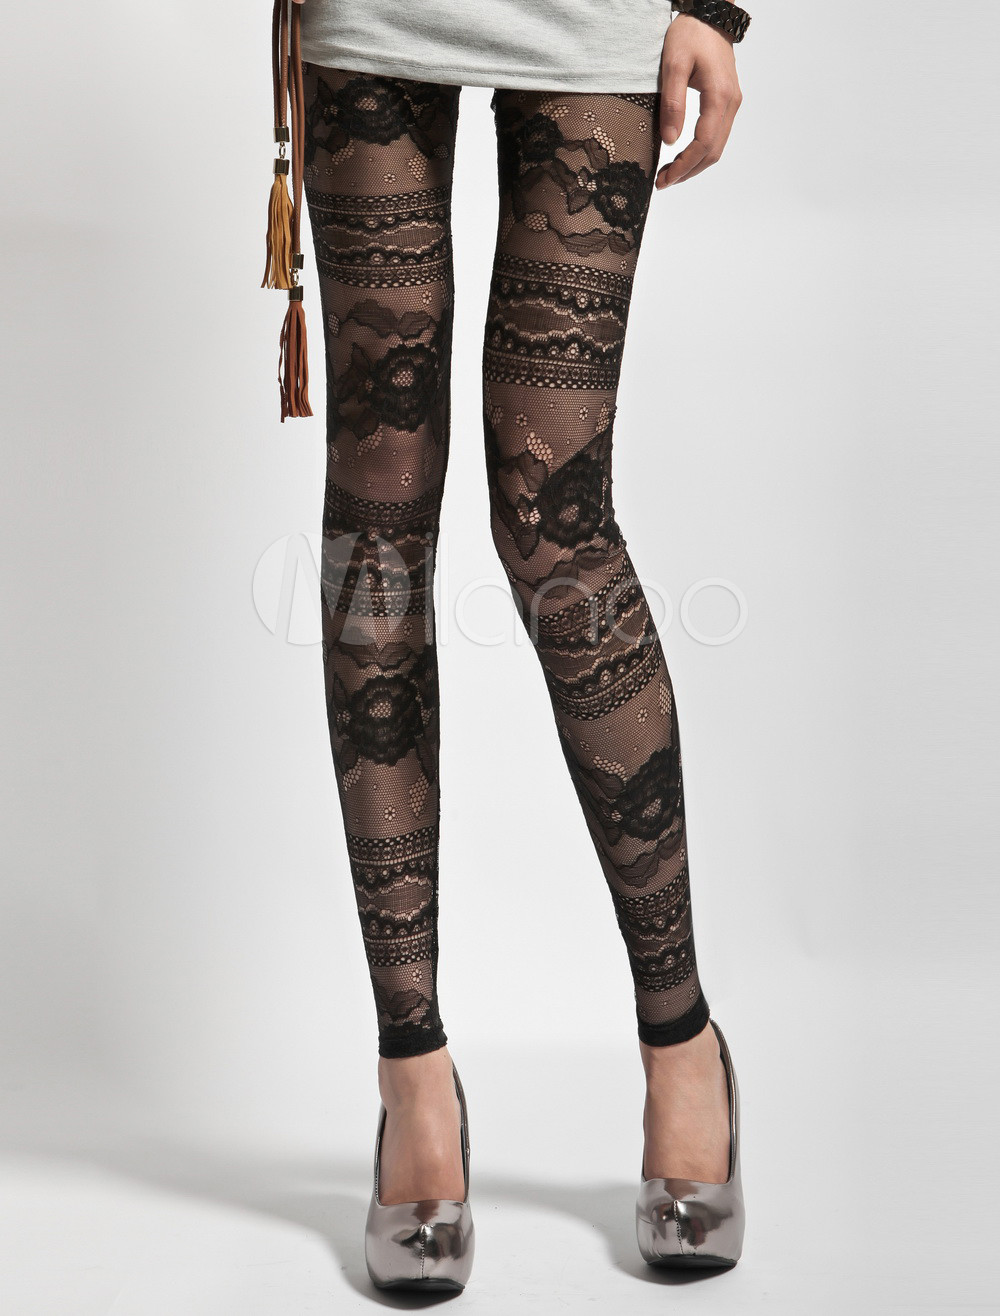 Black Floral Print Lace Leggings - Milanoo.com